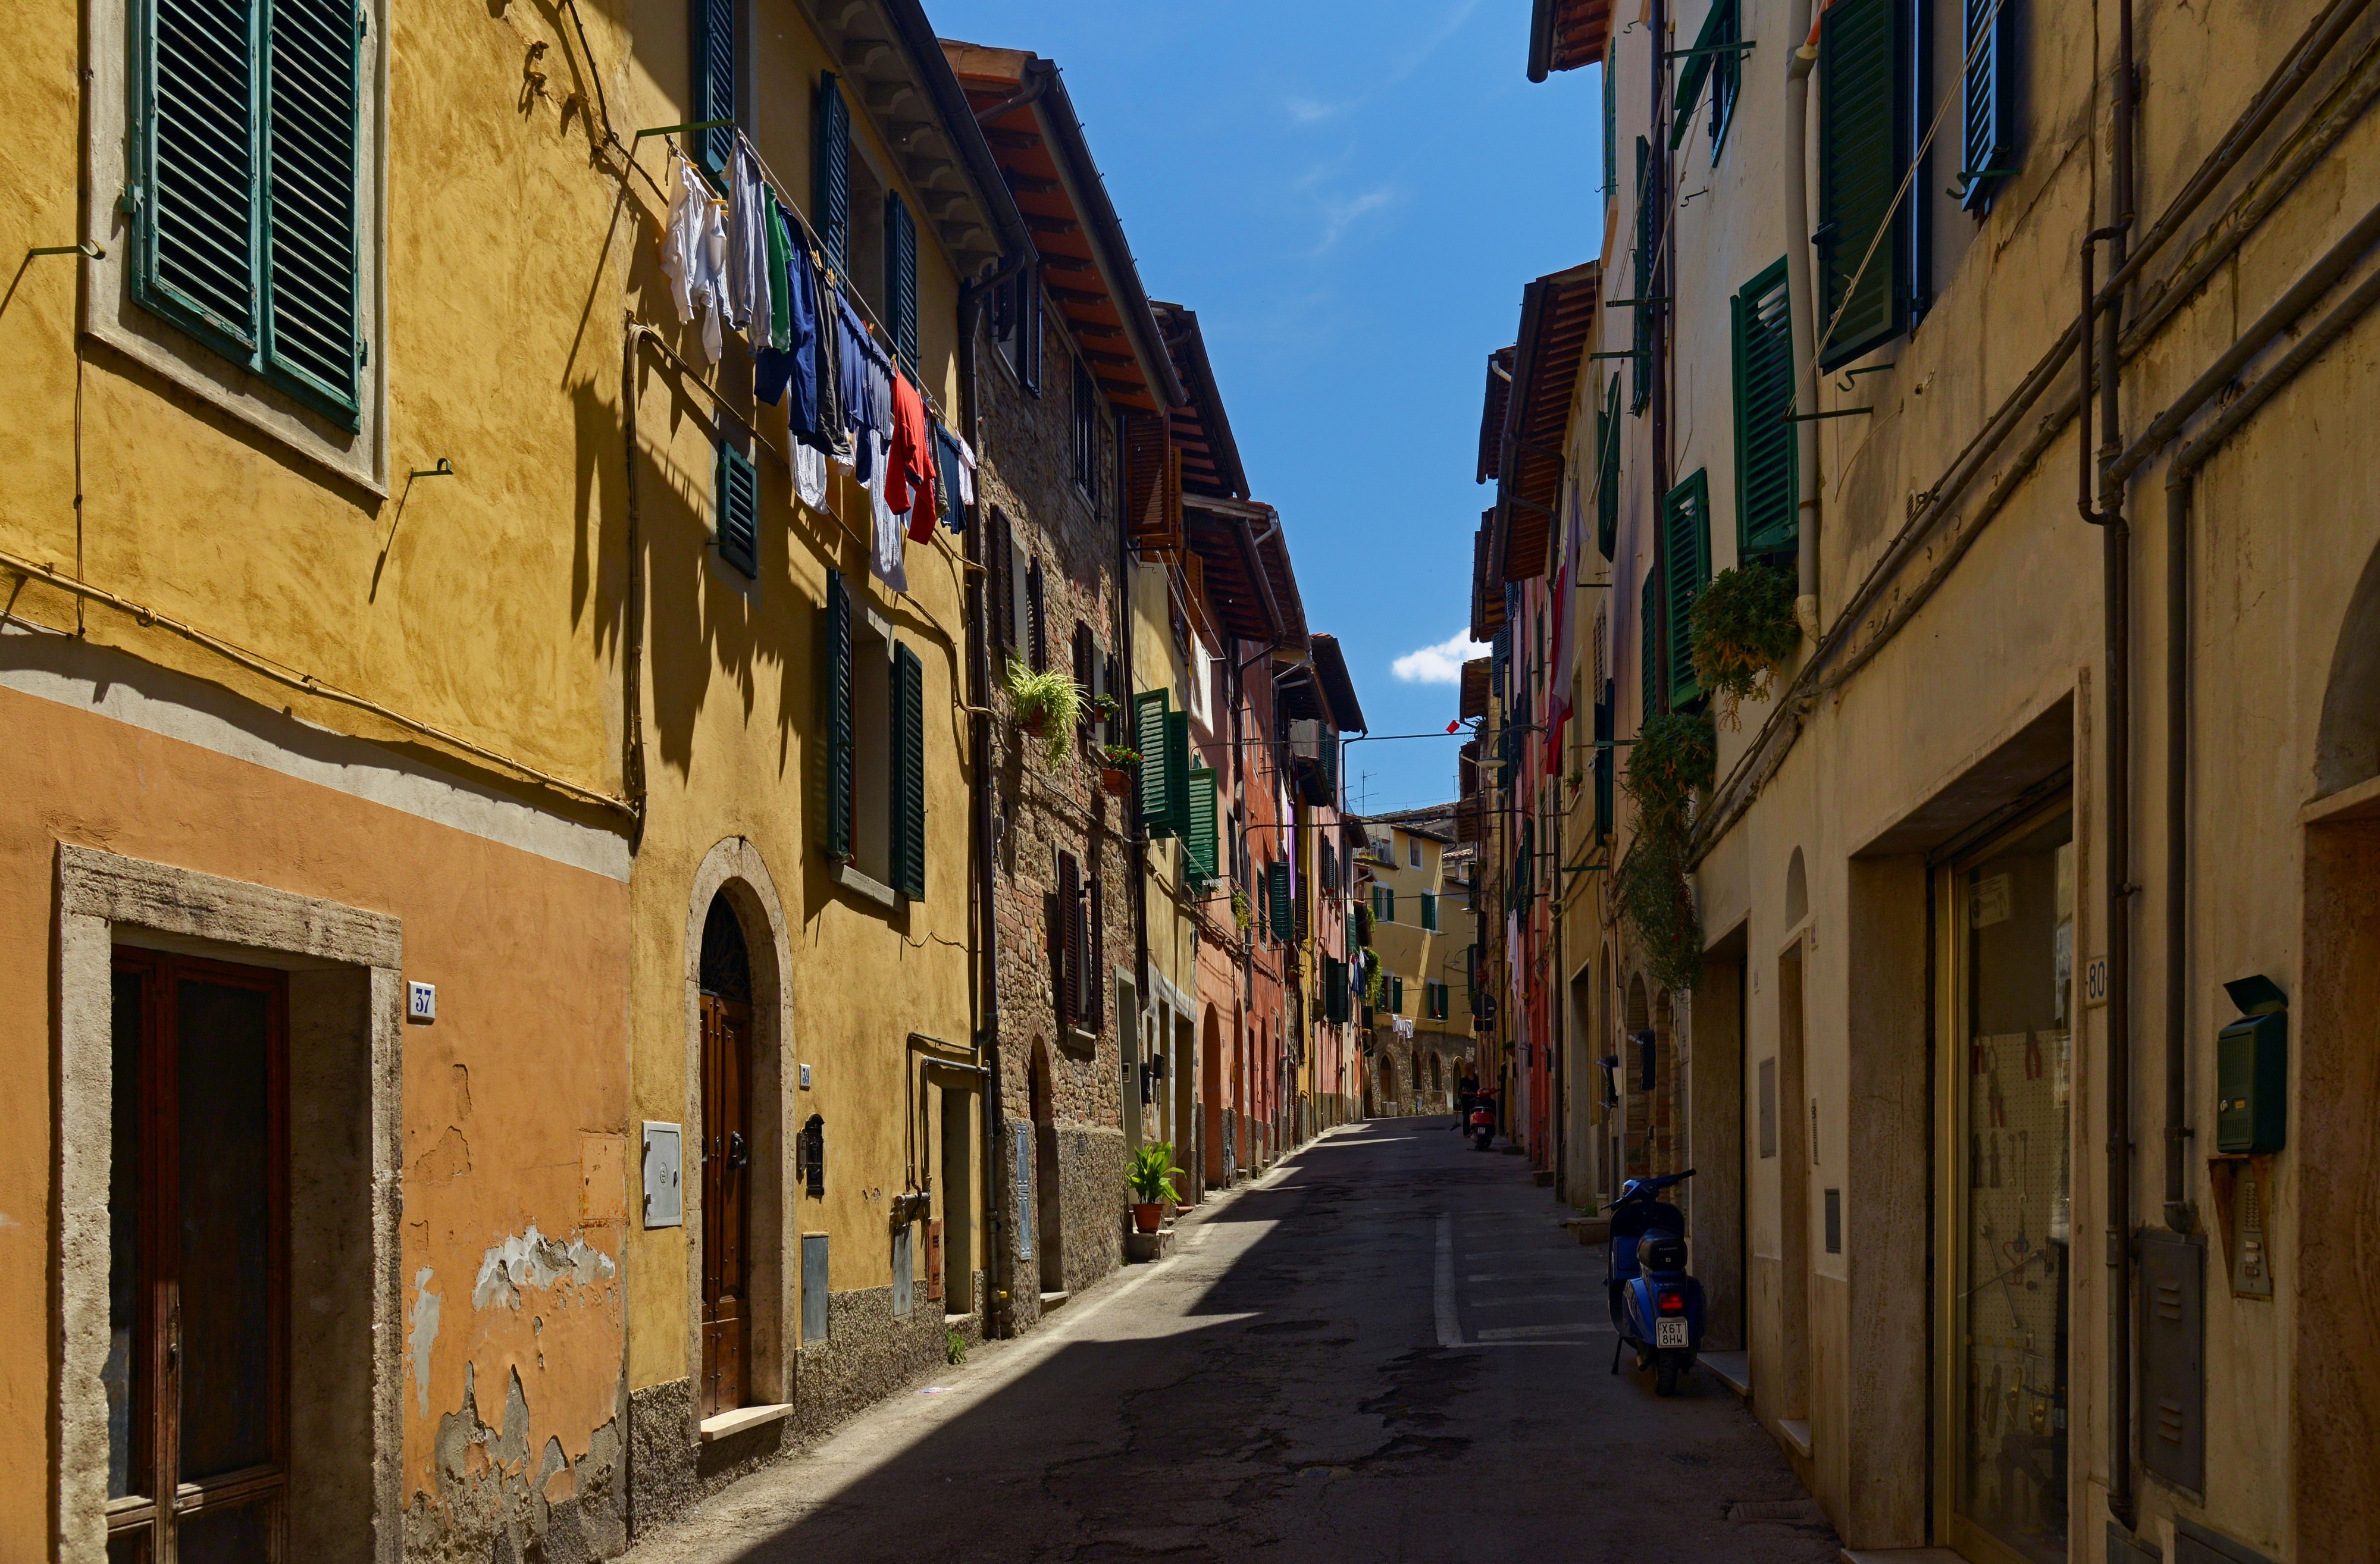 The street in Poggibonsi. Tuscany, Italy